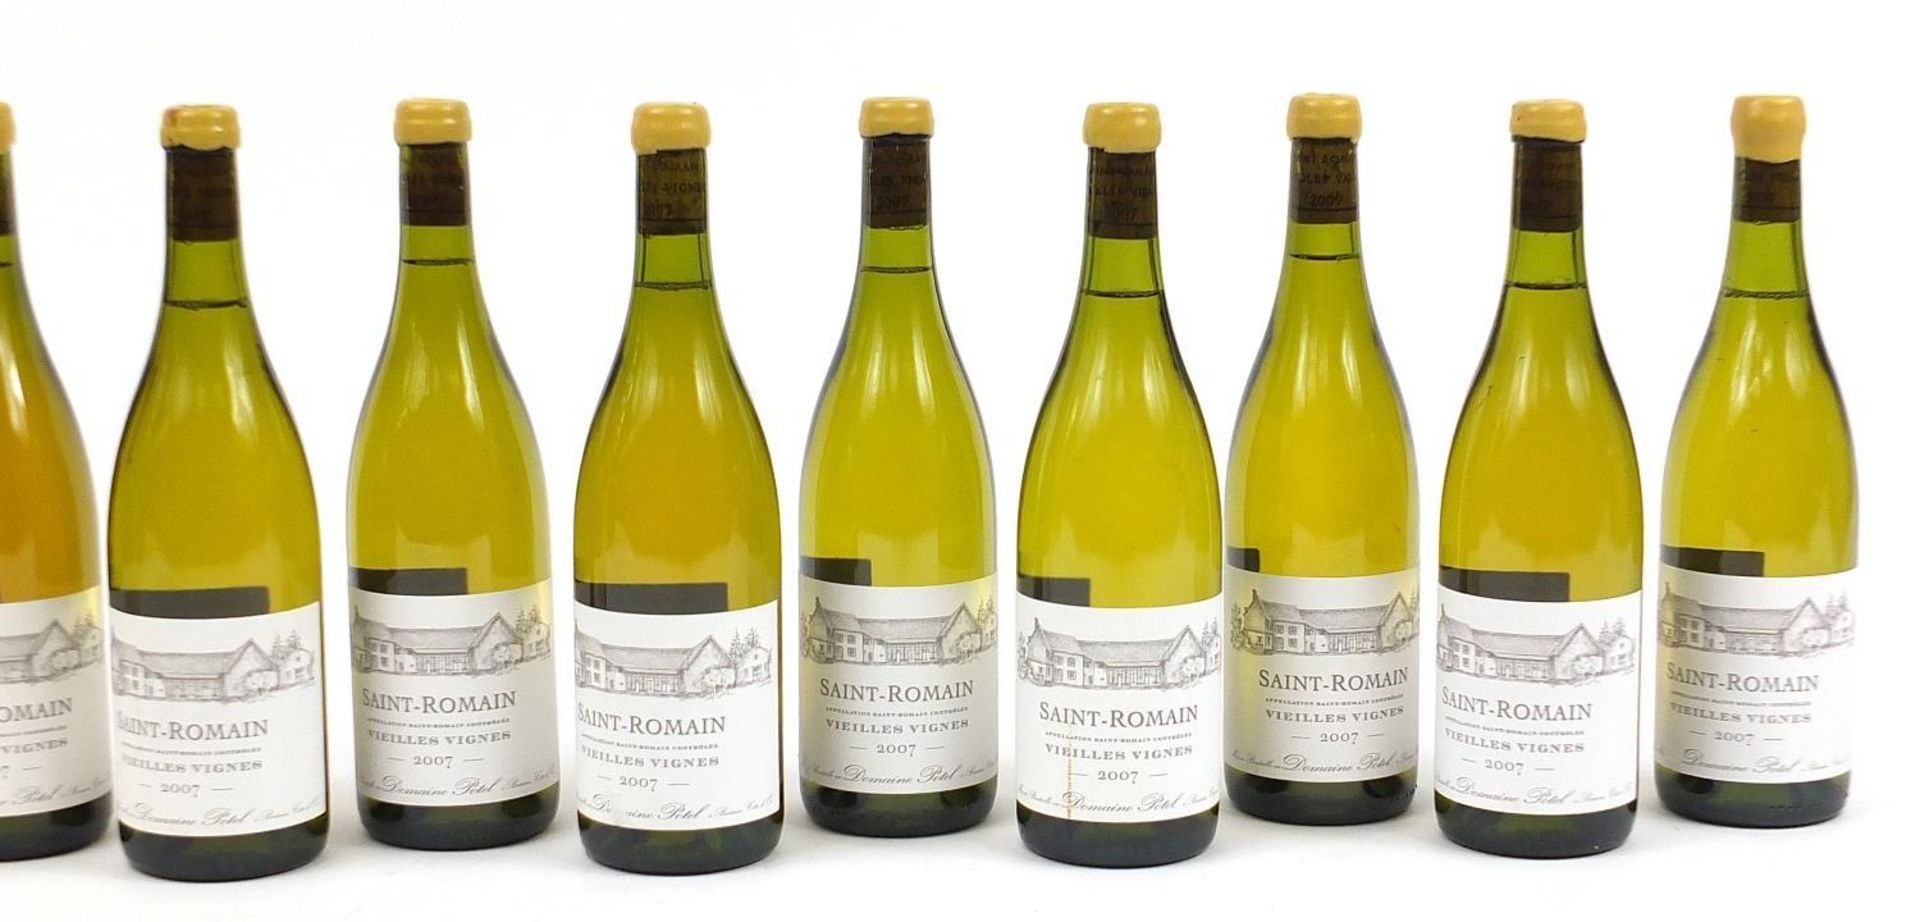 Twelve bottles of 2007 Saint-Romain Vieilles Vignes white wine - Image 3 of 4